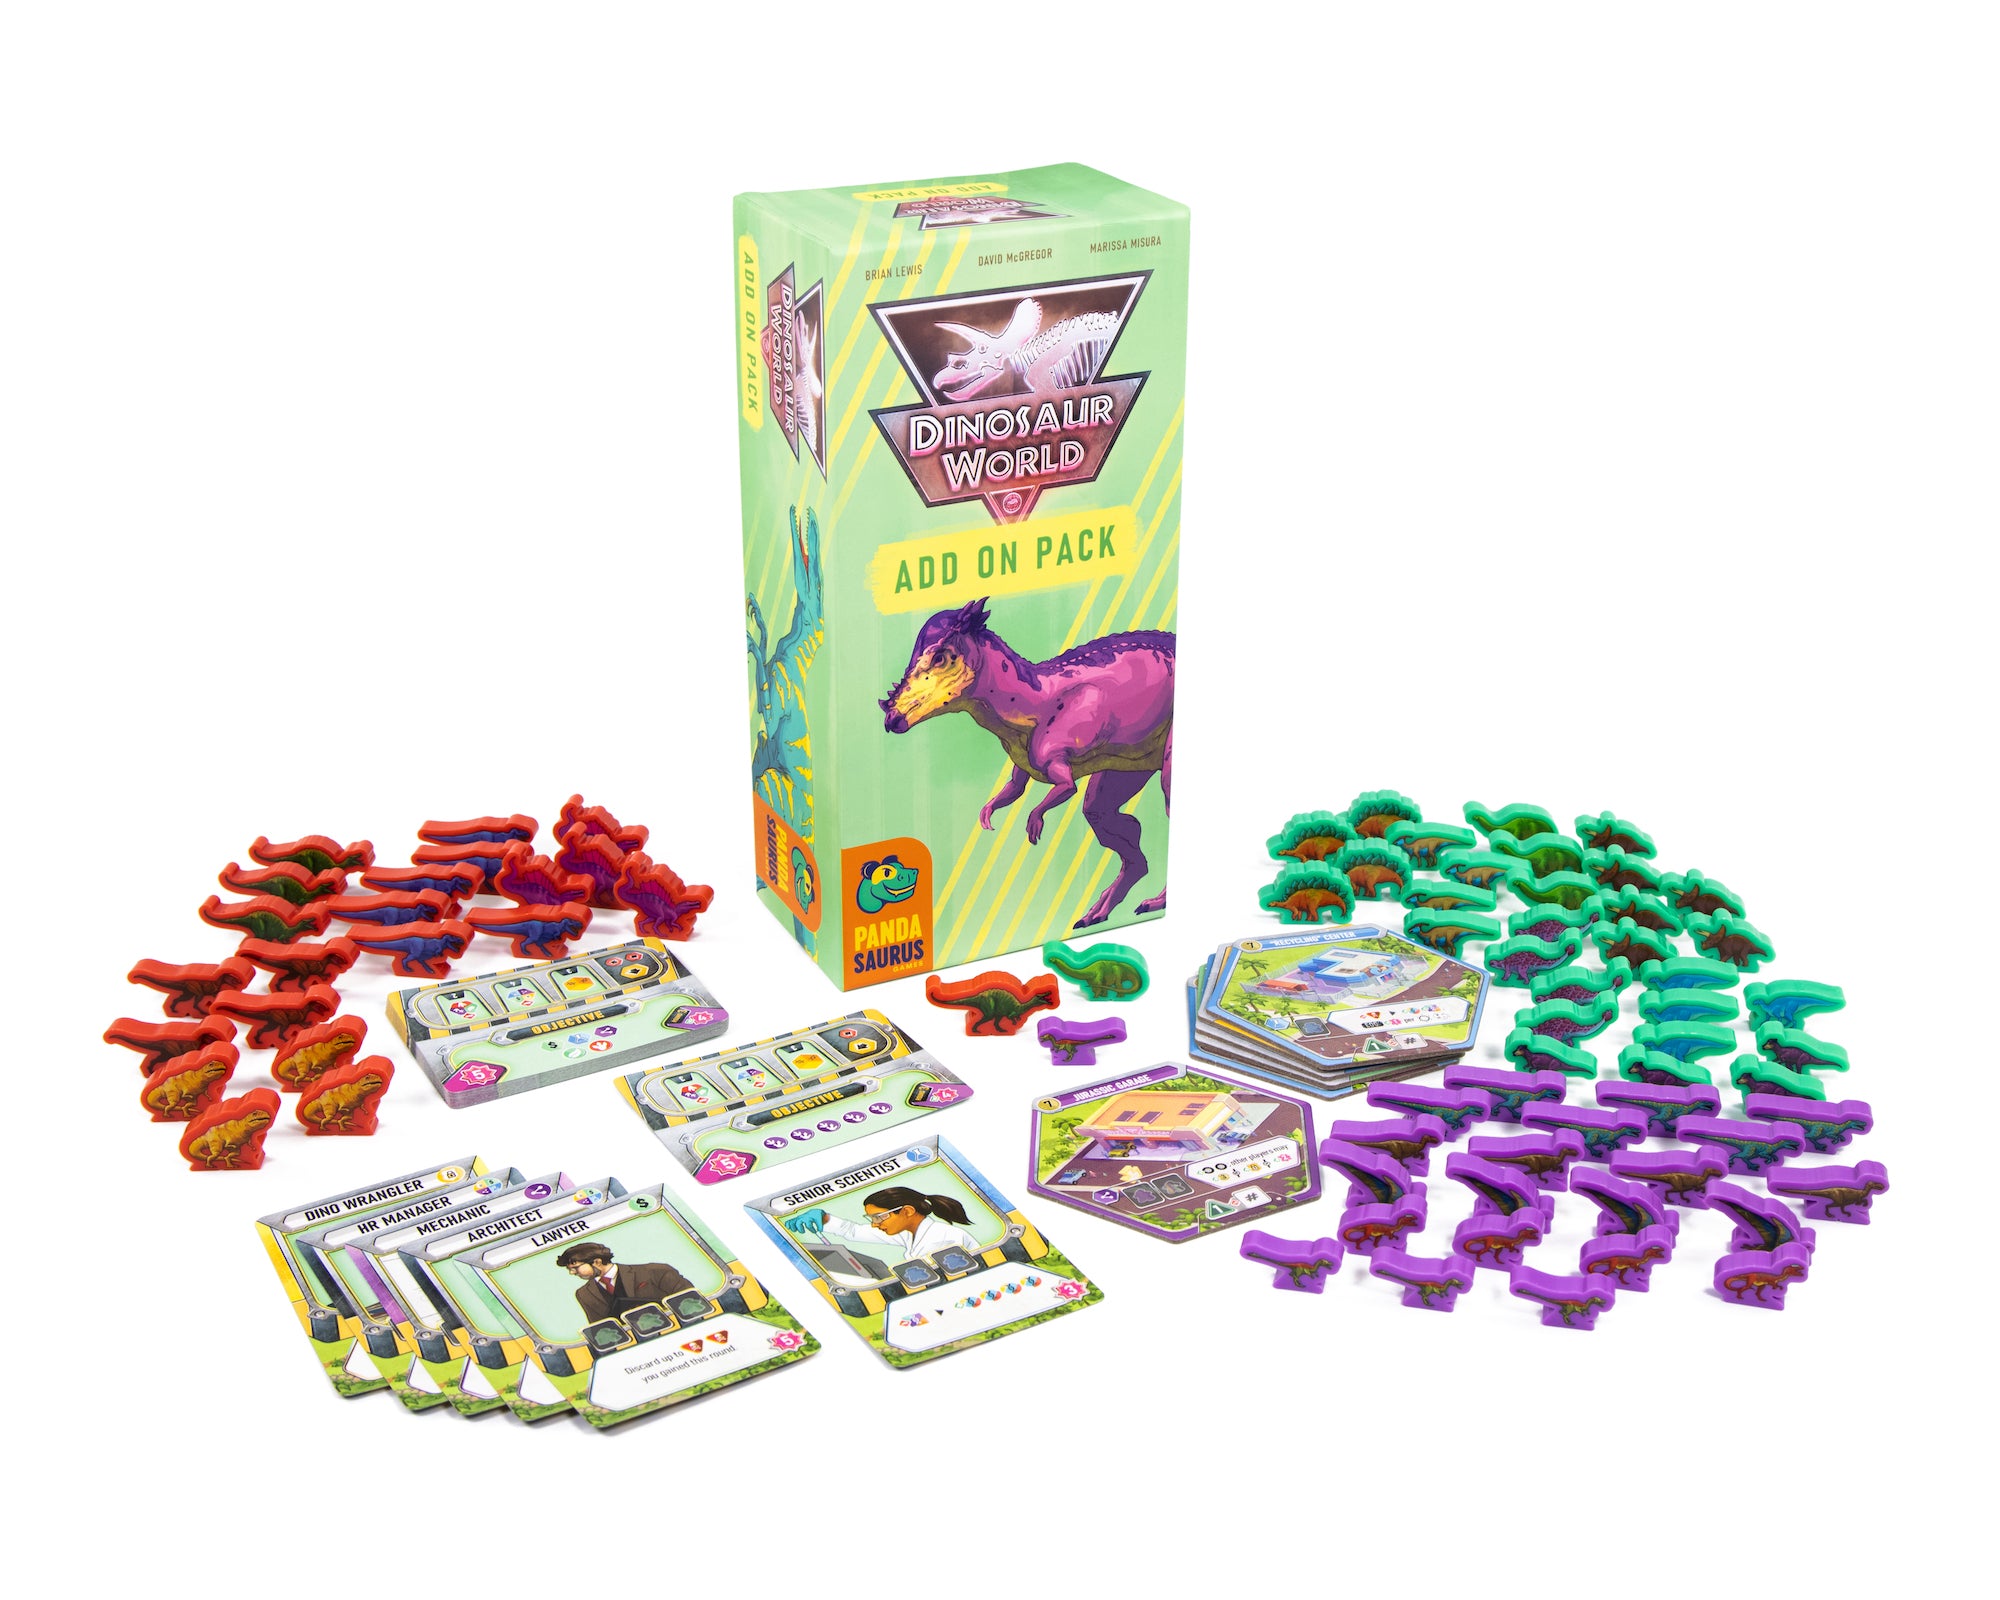 Dinoverse: A Dinosaur Card Game by Capital Gains Studio — Kickstarter